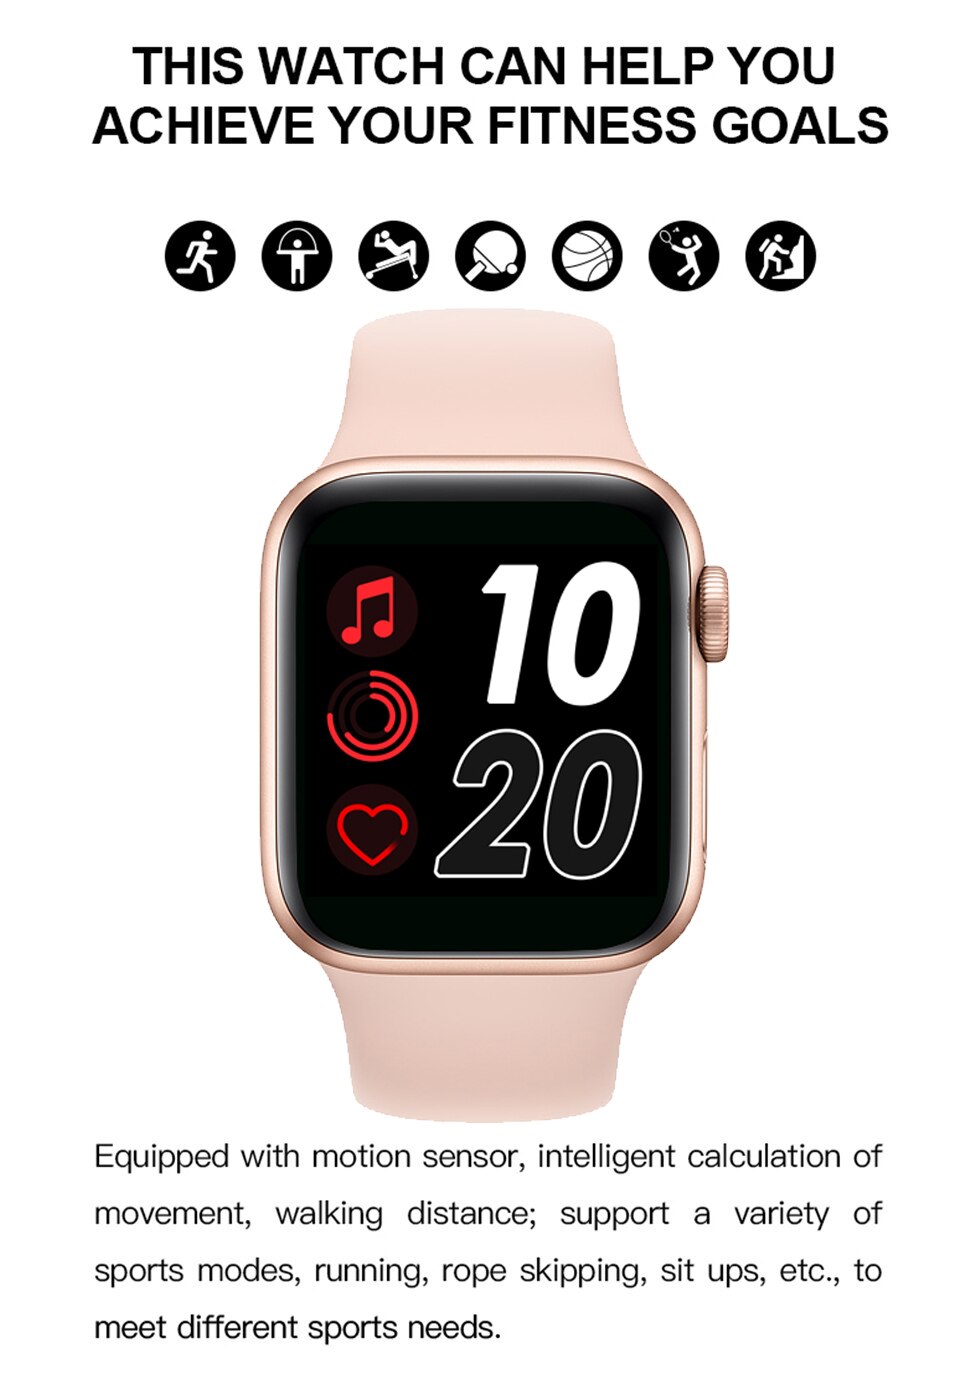 T500 Smartwatch IWO13 Serie 5 Bluetooth Call 44Mm Smart Horloge Hartslagmeter Bloeddruk Voor Ios Android Pk iwo 12 Iwo 8